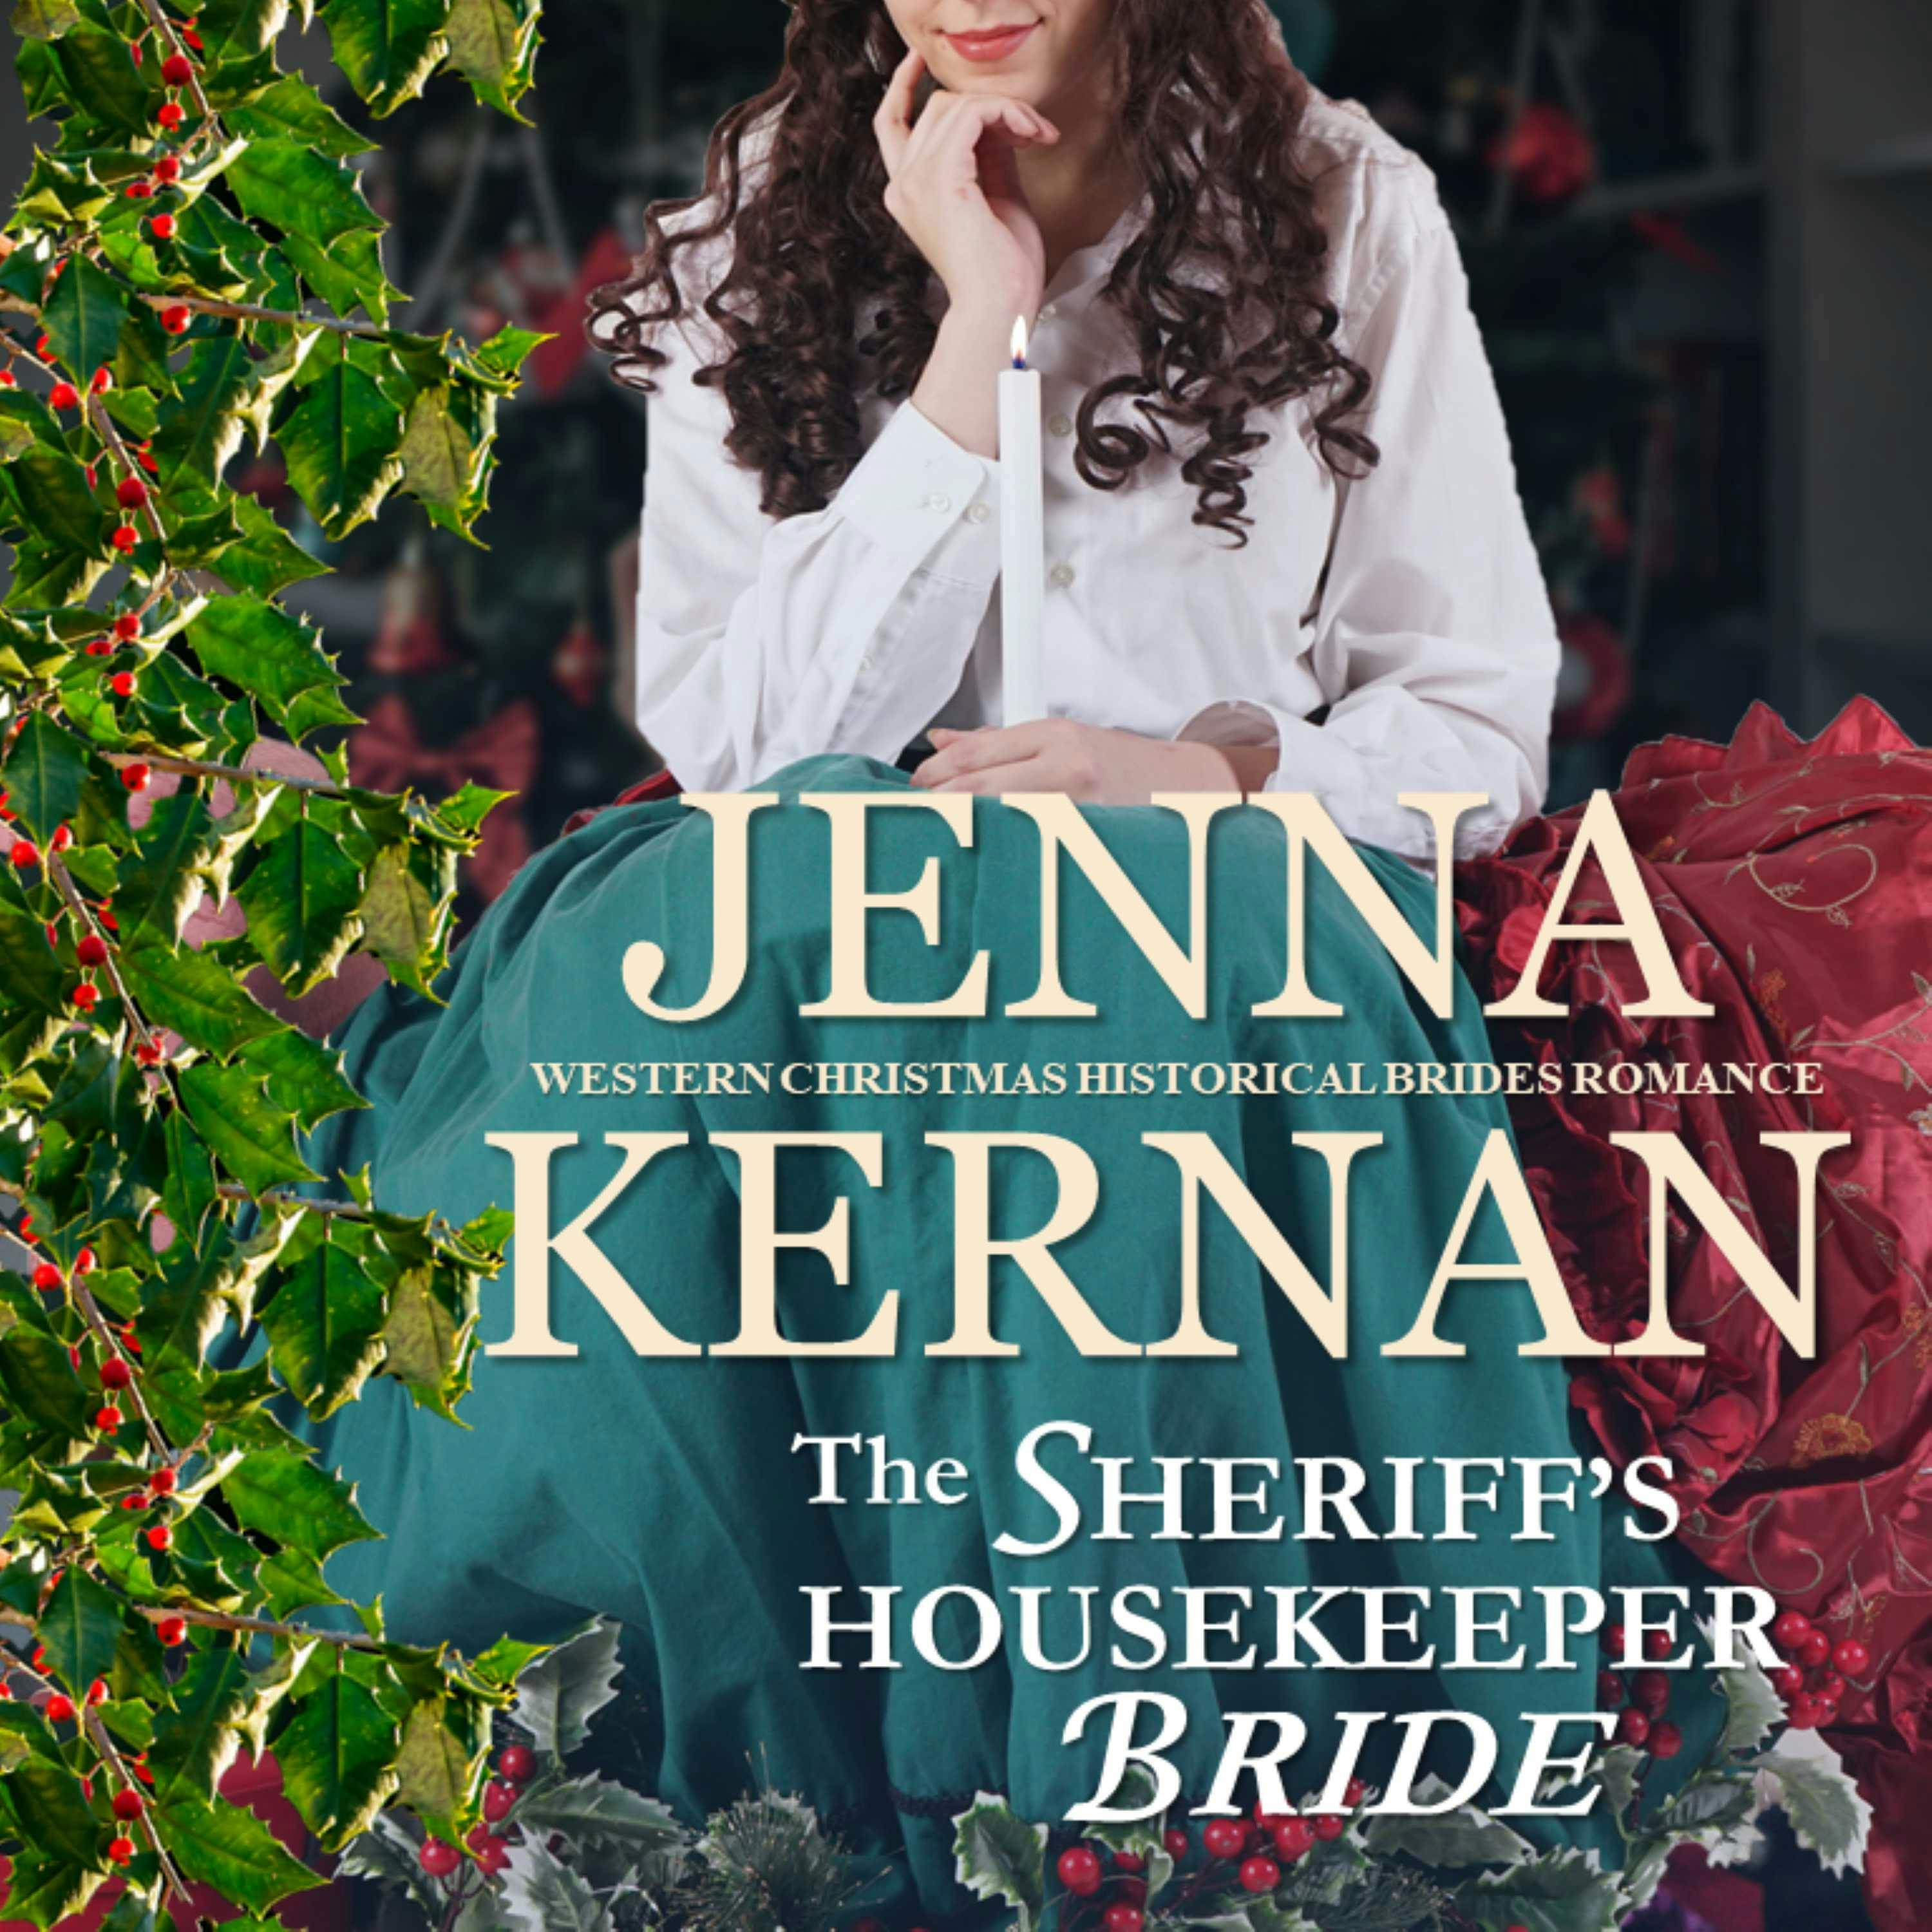 The Sheriff's Housekeeper Bride: Western Christmas Historical Brides Romance - Jenna Kernan